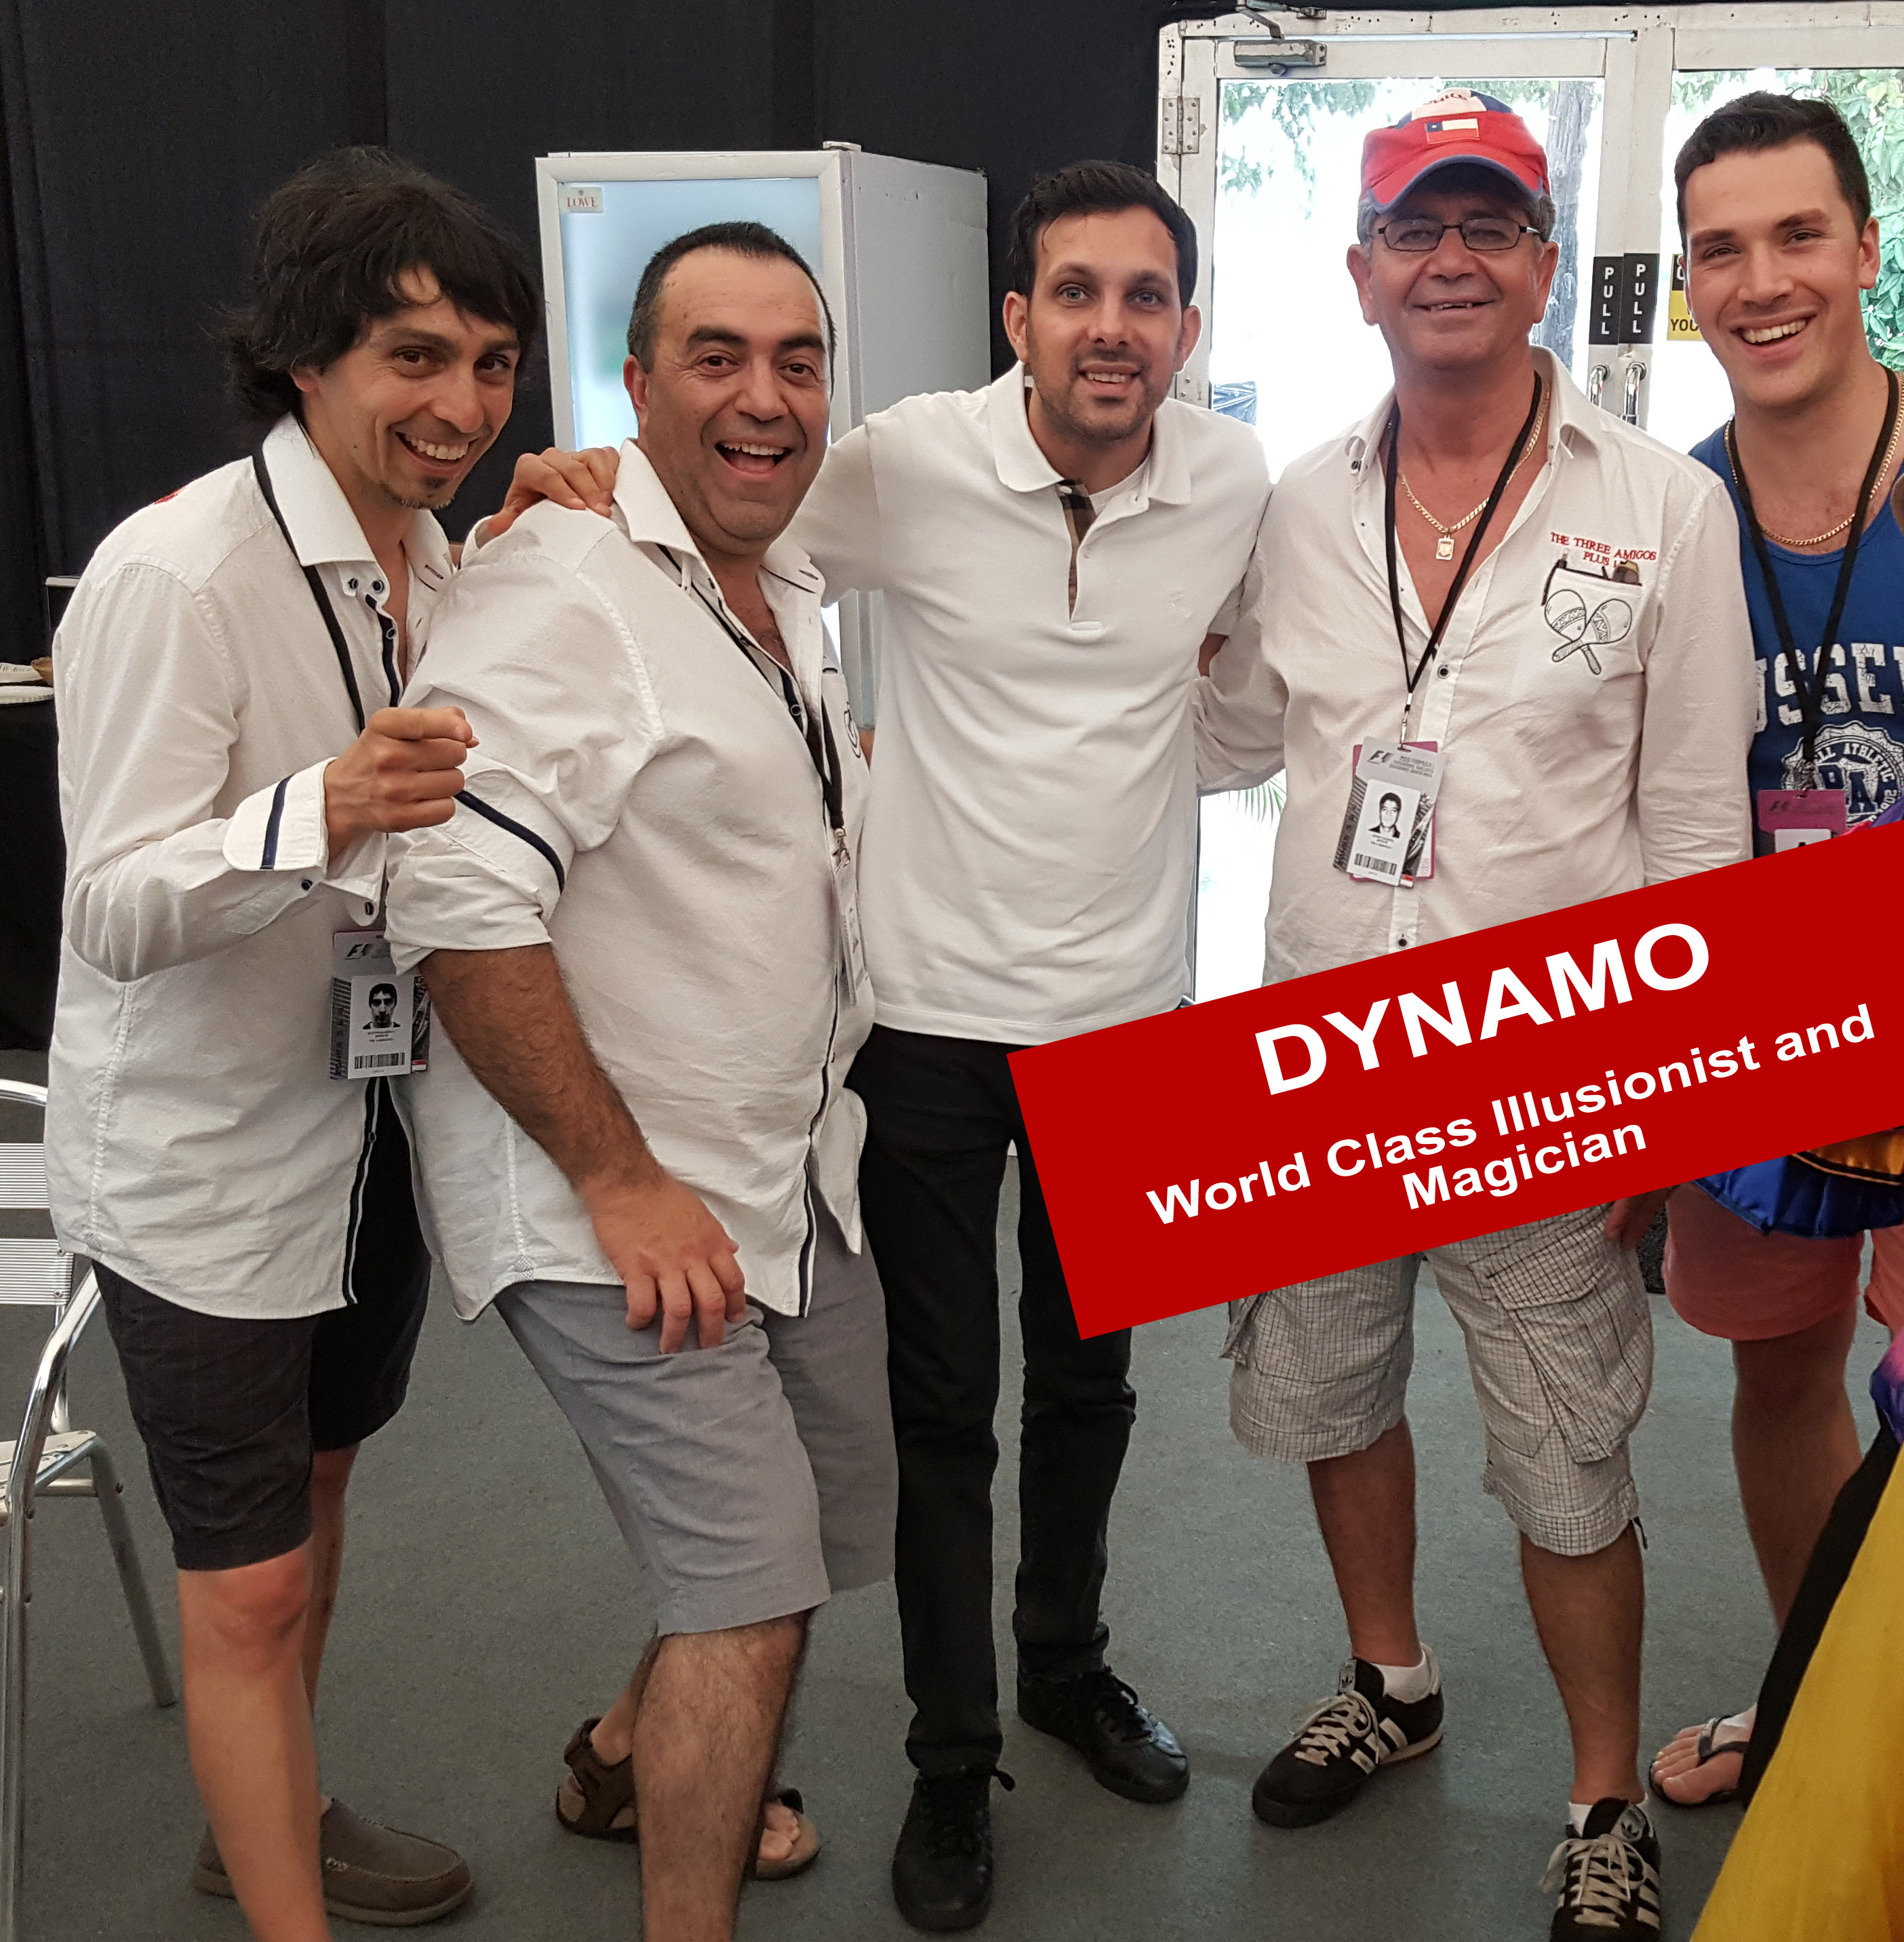 Dynamo Magician Illusionist Singpapore Formula One Grand Prix. Kylie Minogue Adam Lambert